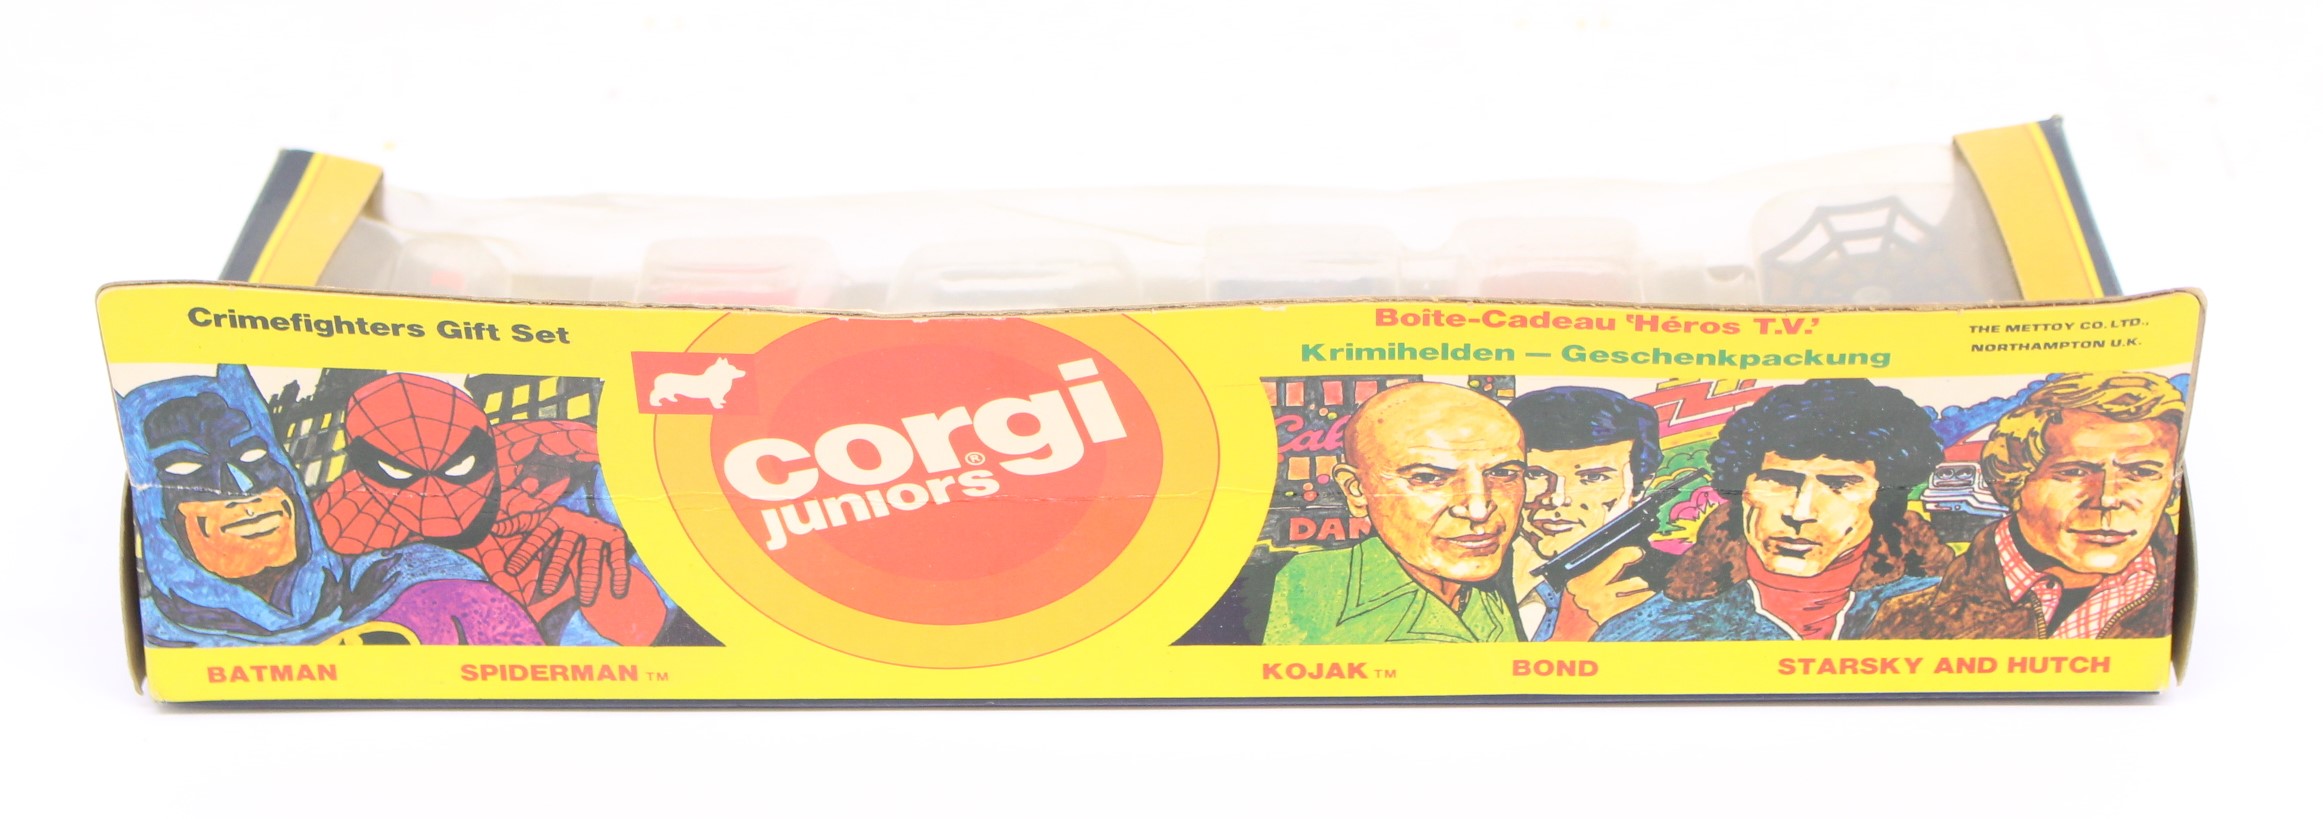 Corgi: A boxed Corgi Juniors, Crimefighters Gift Set, Reference No. 3021. Containing six cars to - Image 3 of 3